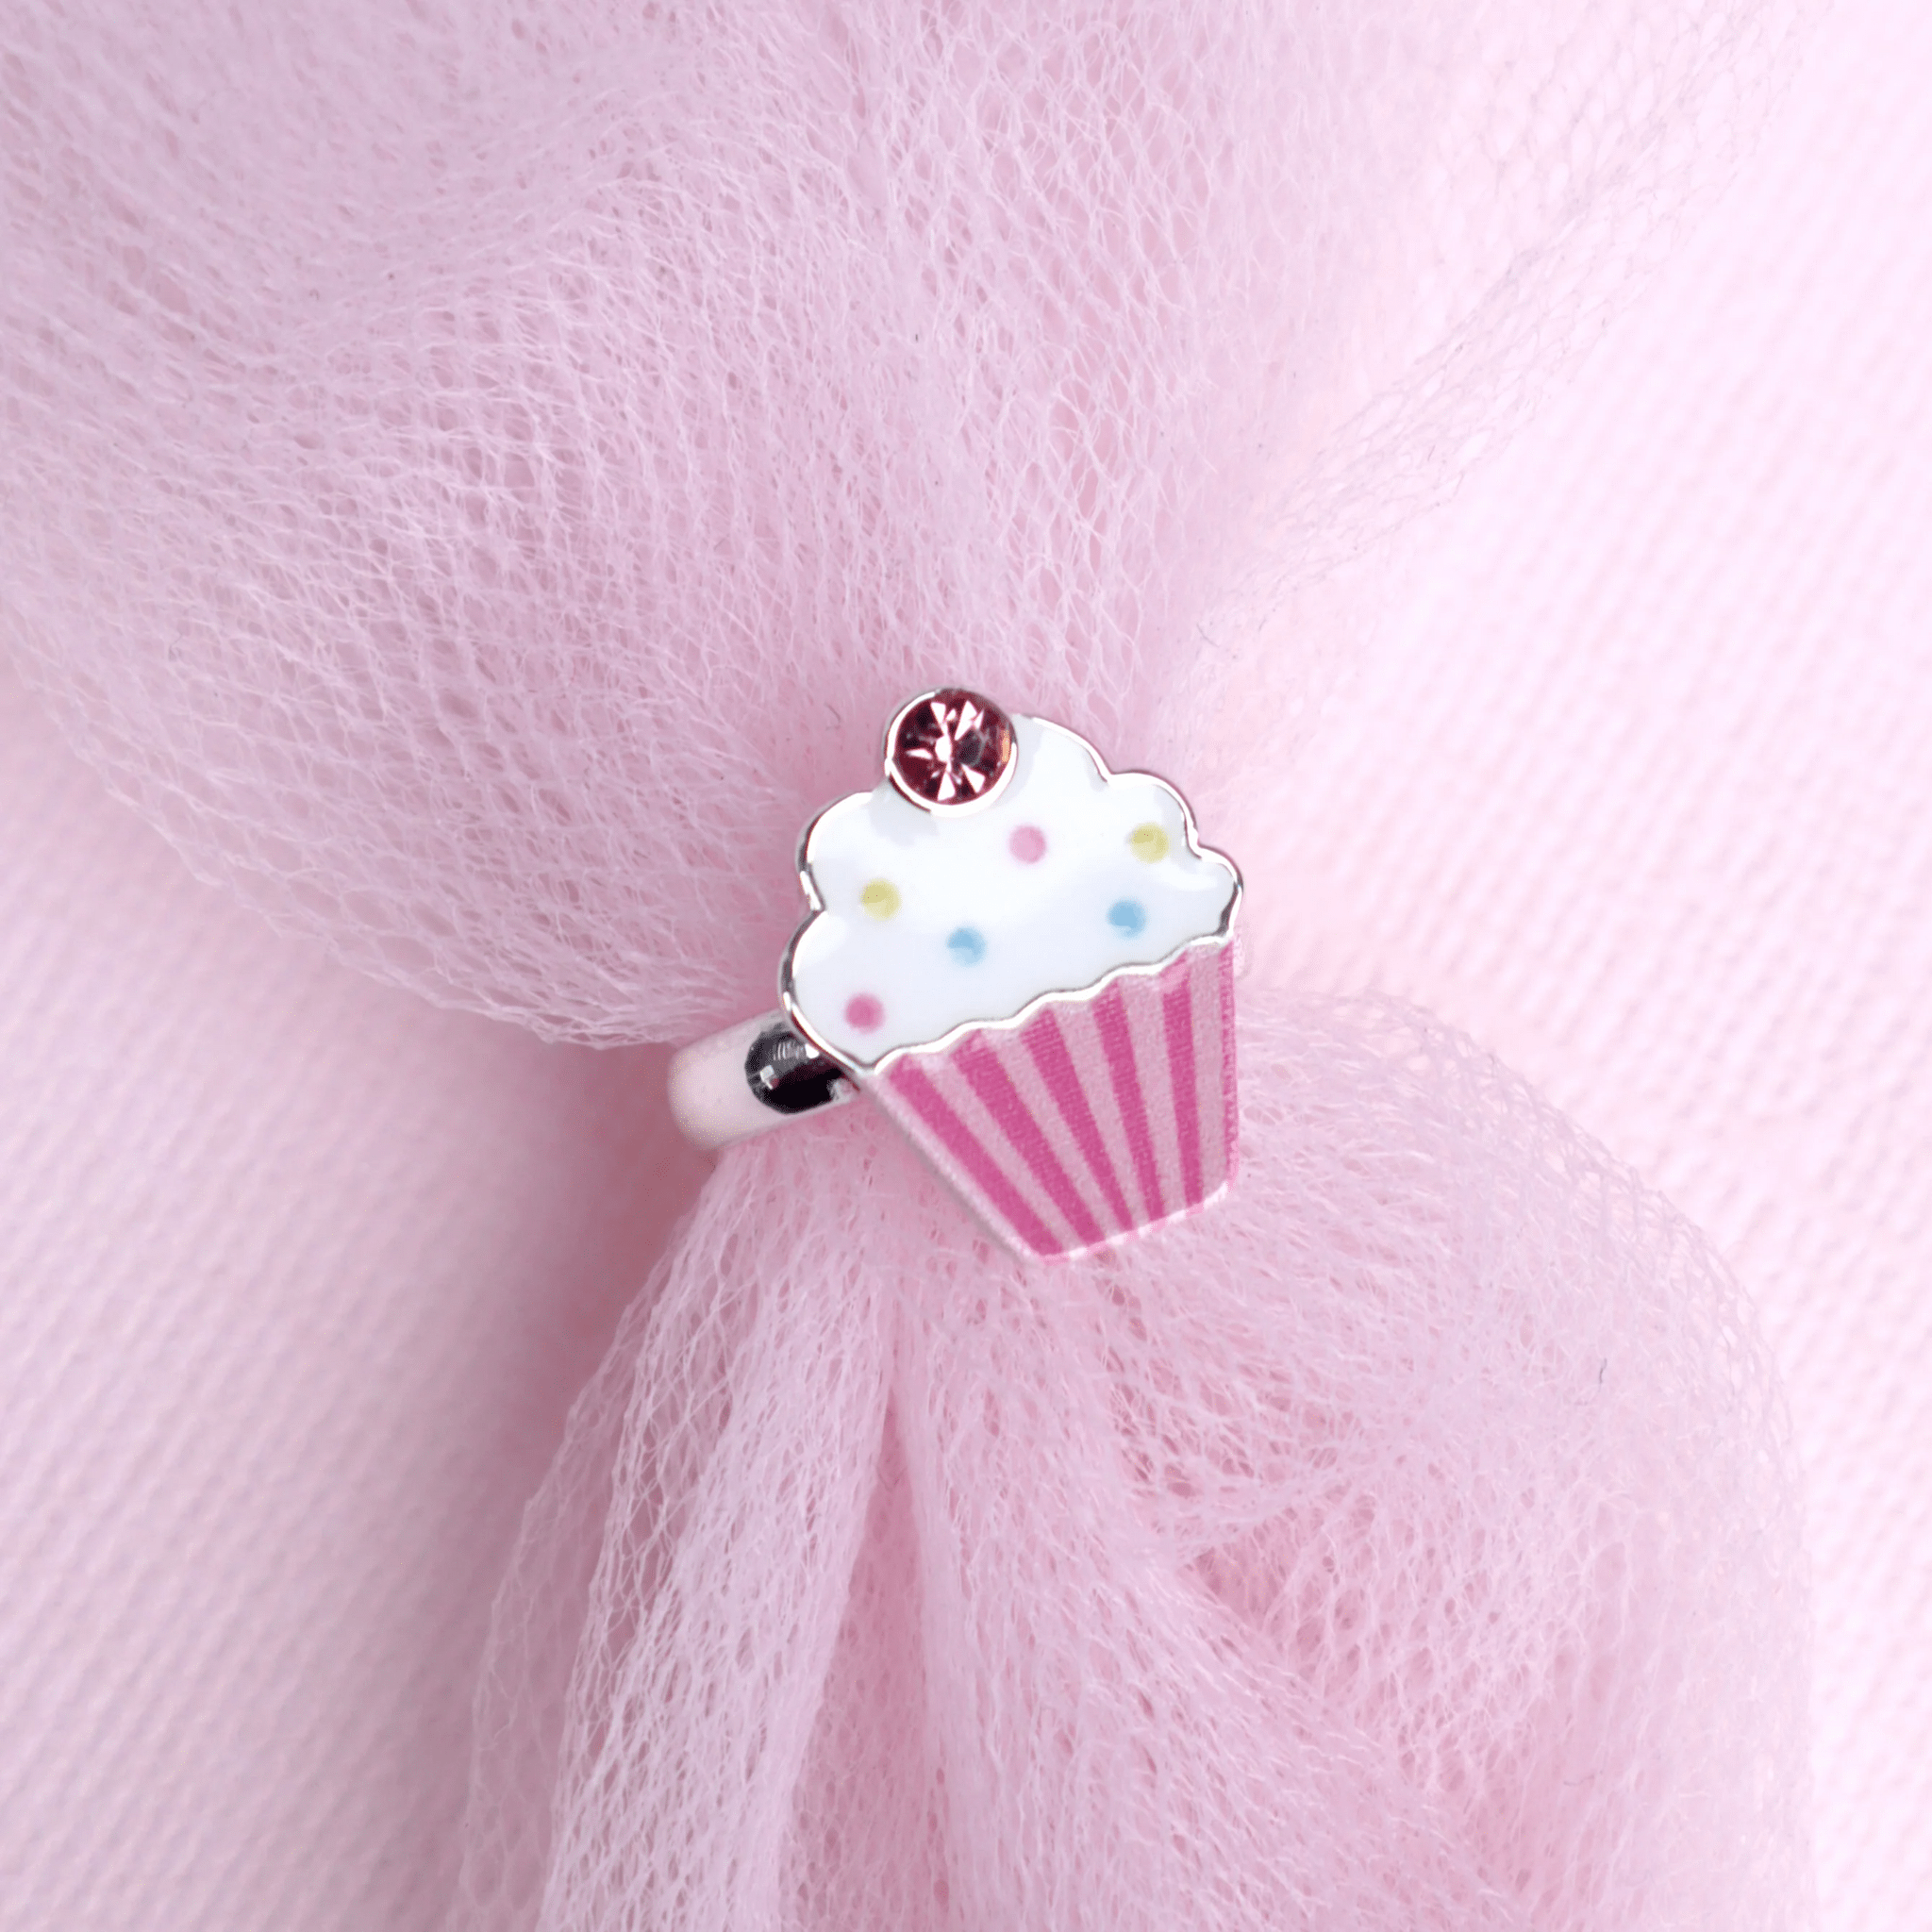 Lauren Hinkley Girls Accessory Cupcake Ring in Pink Cupcake Velvet Box